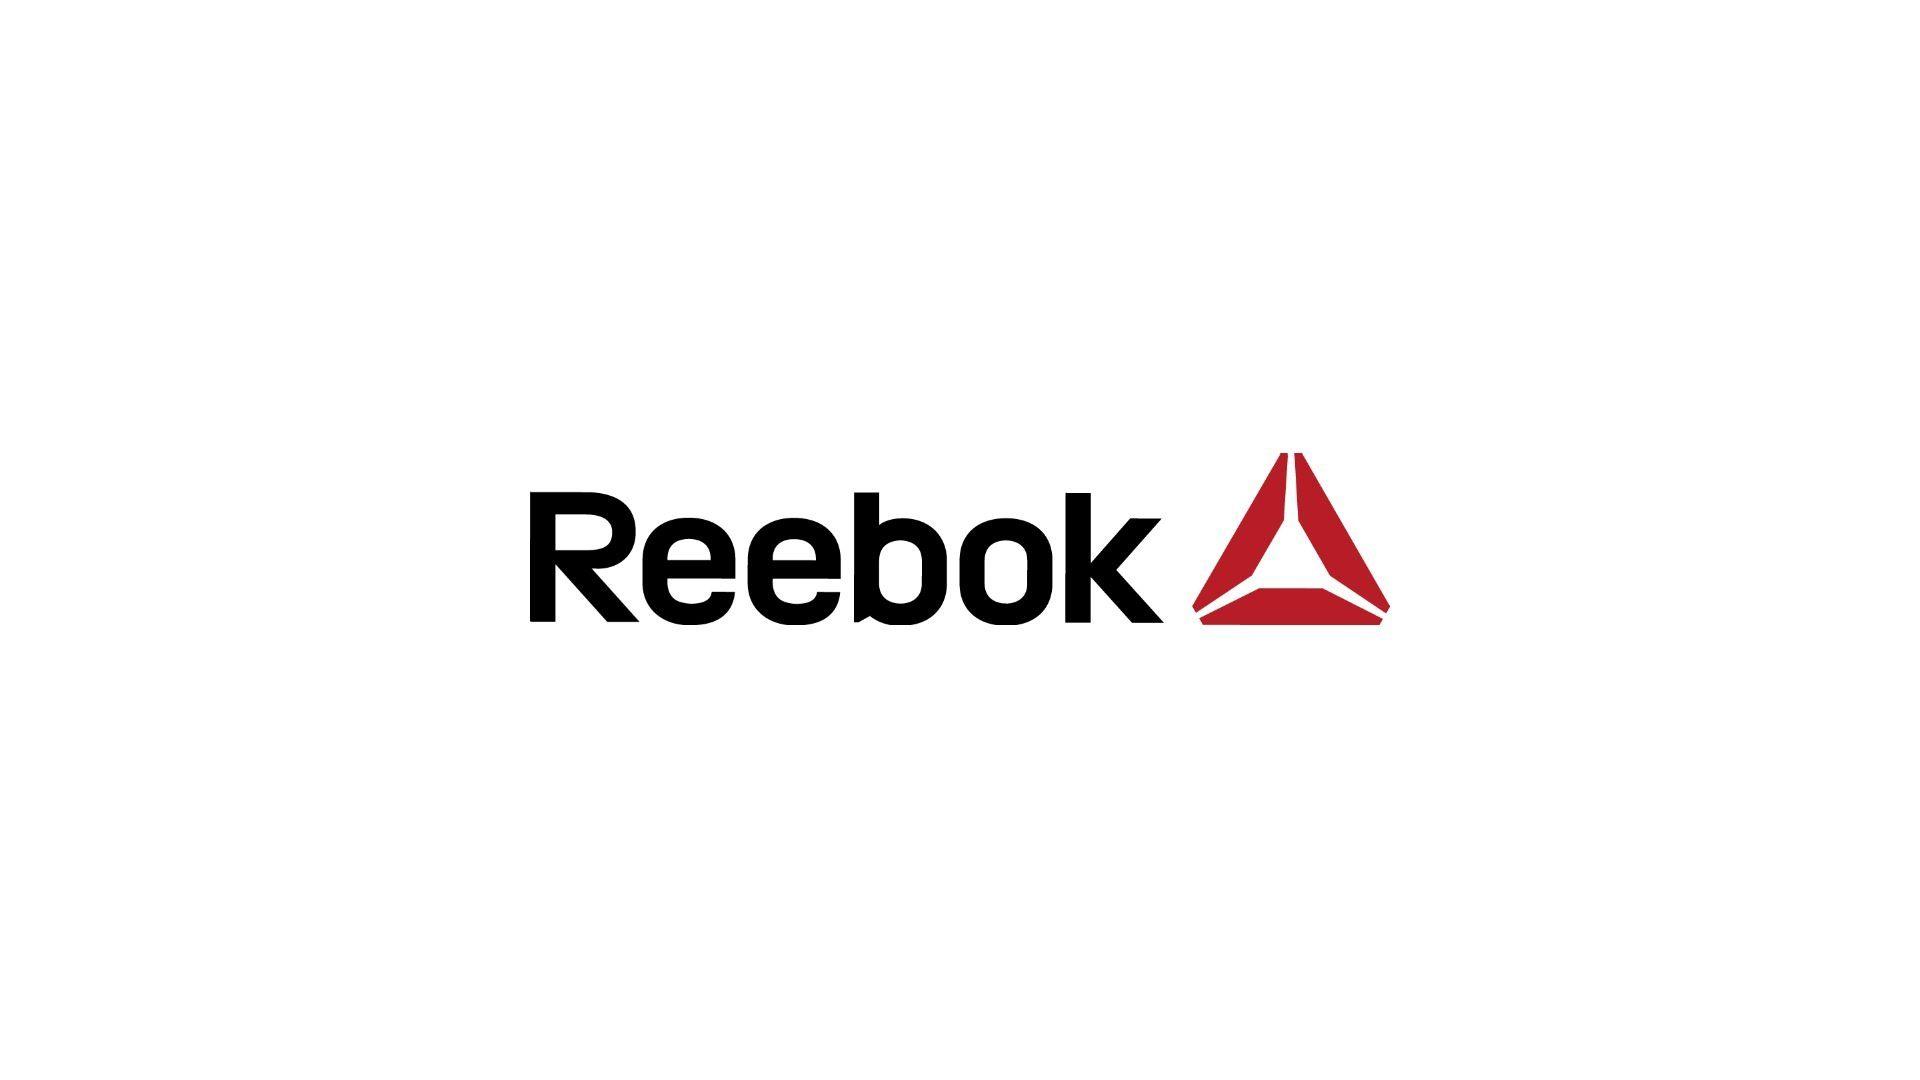 Reebok Logos Wallpaper. Full HD Picture